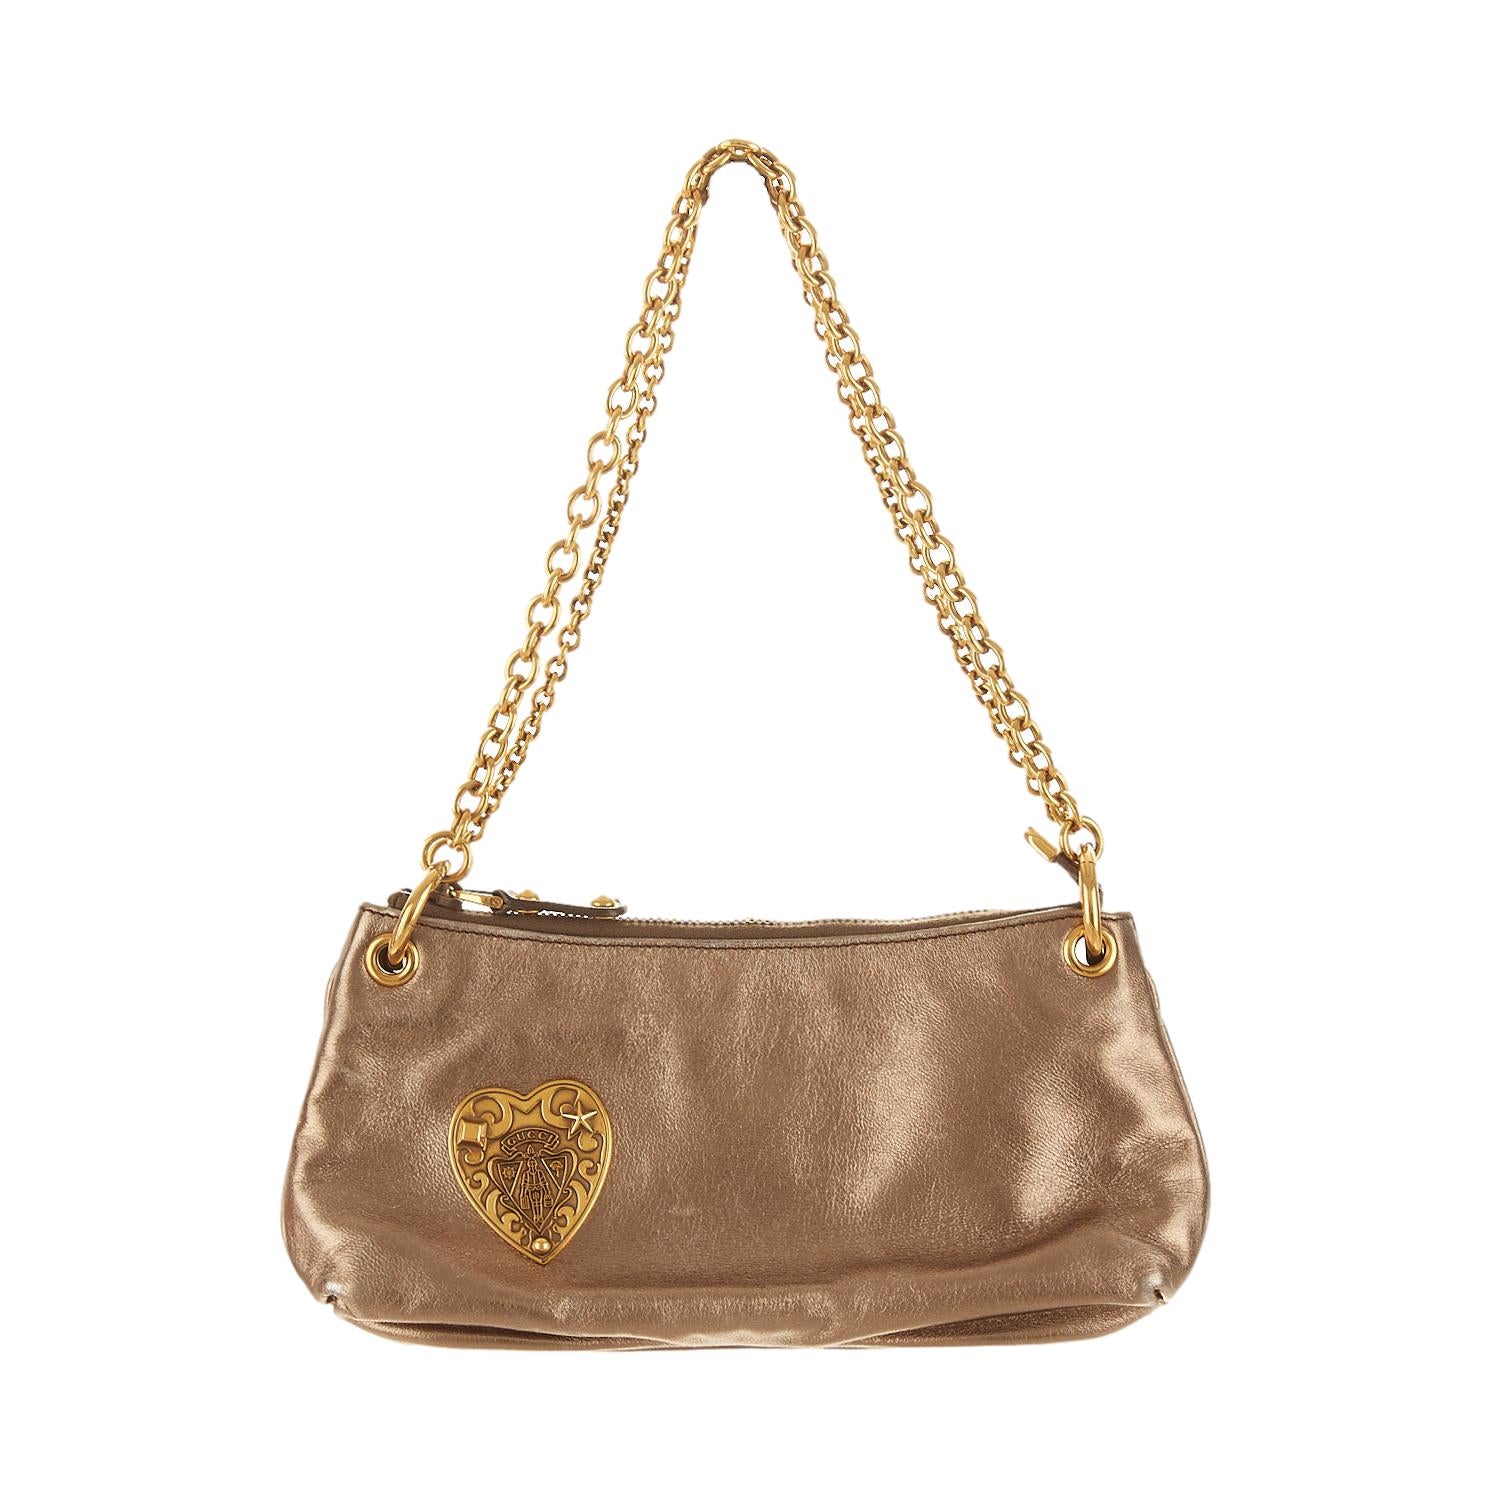 Gucci Gold Heart Chain Shoulder Bag